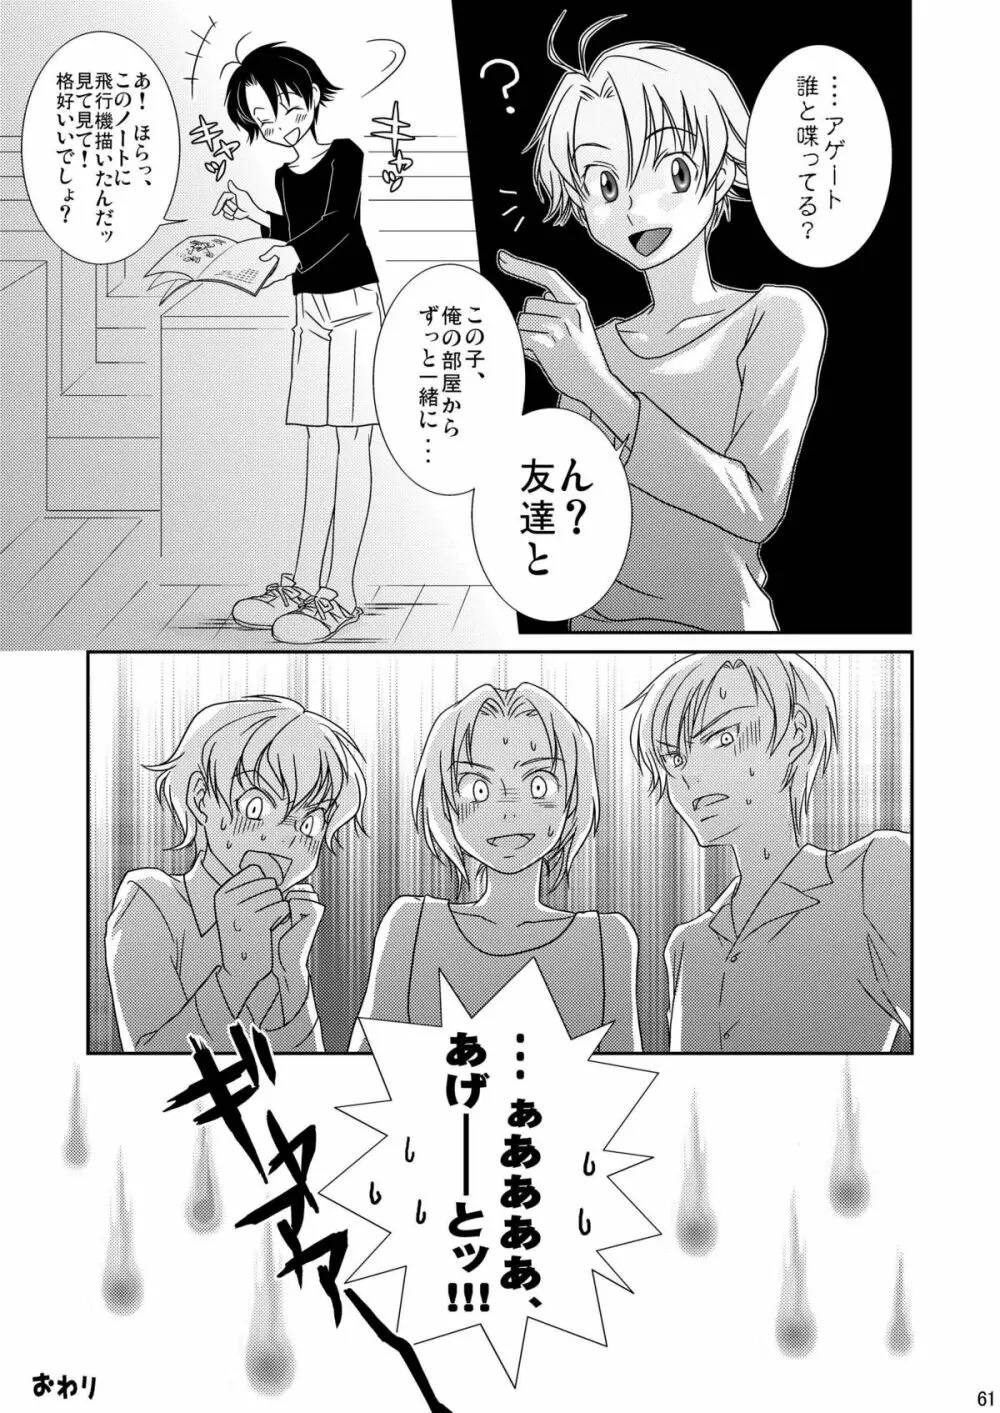 Re: ぷれい2 - page61